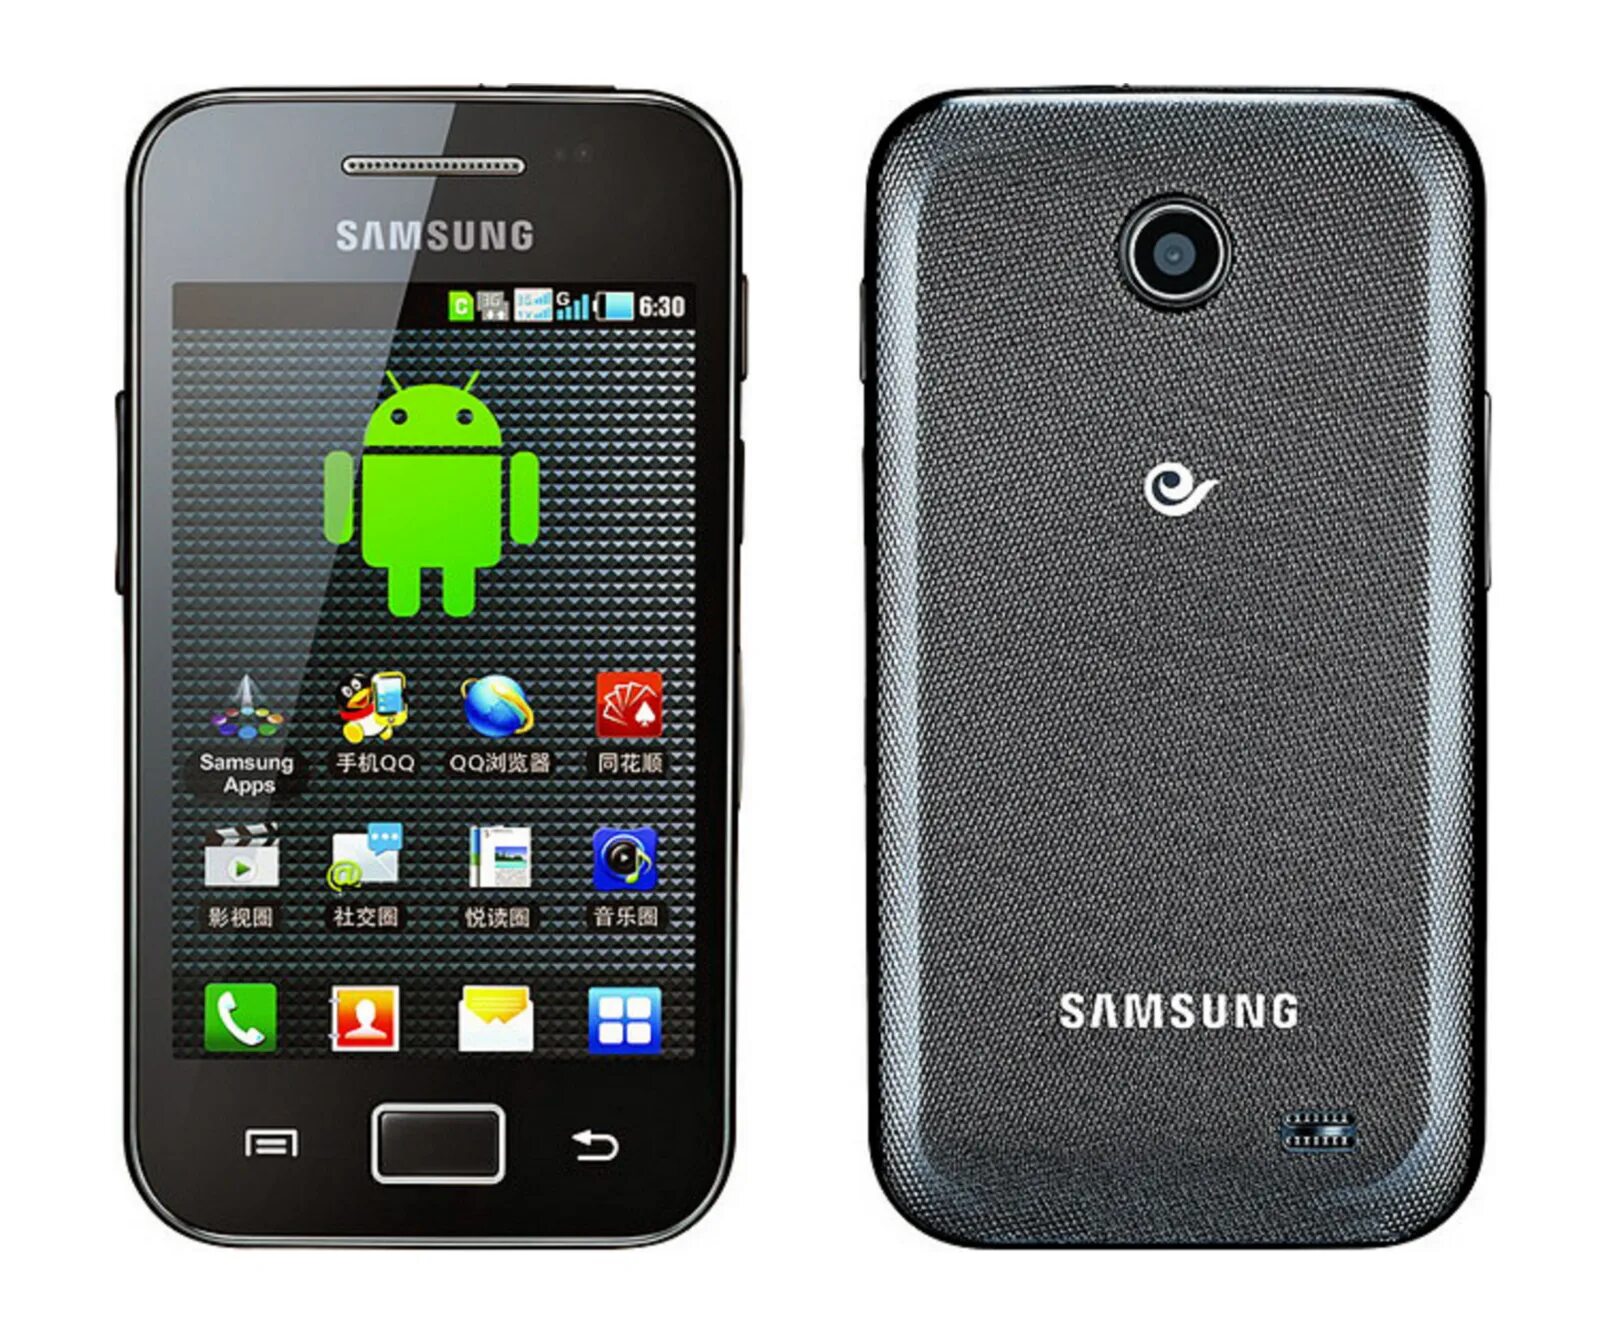 Самсунг галакси айс 1. Samsung Ace 1. Списунг гелакси Эйс 3. Самсунг Гэлакси Эйс 1. Телефон самсунг андроид 2